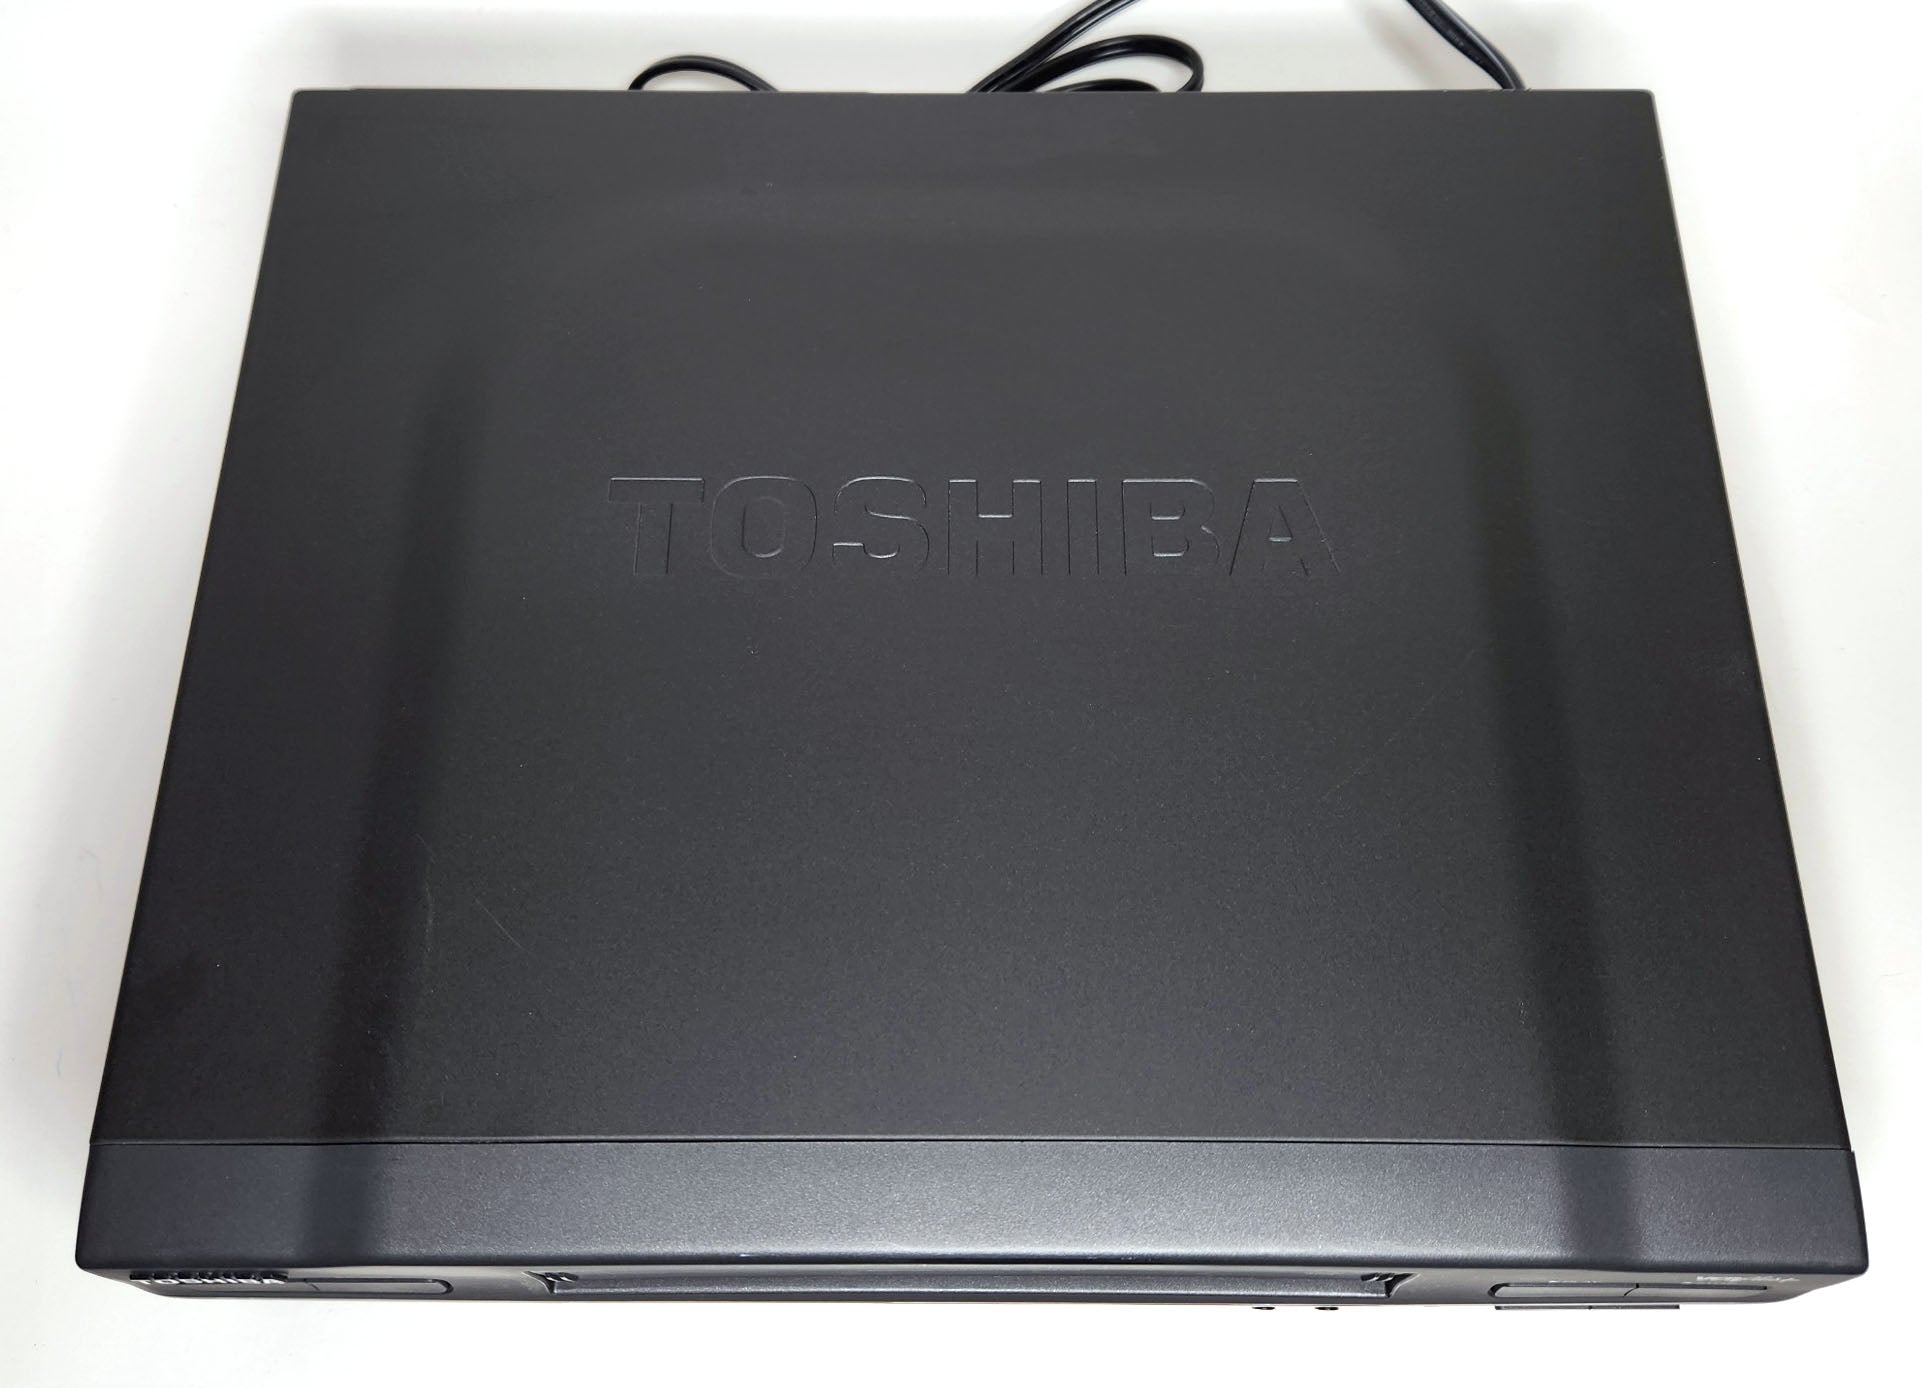 Toshiba M-45 VCR, 4-Head Mono - Top